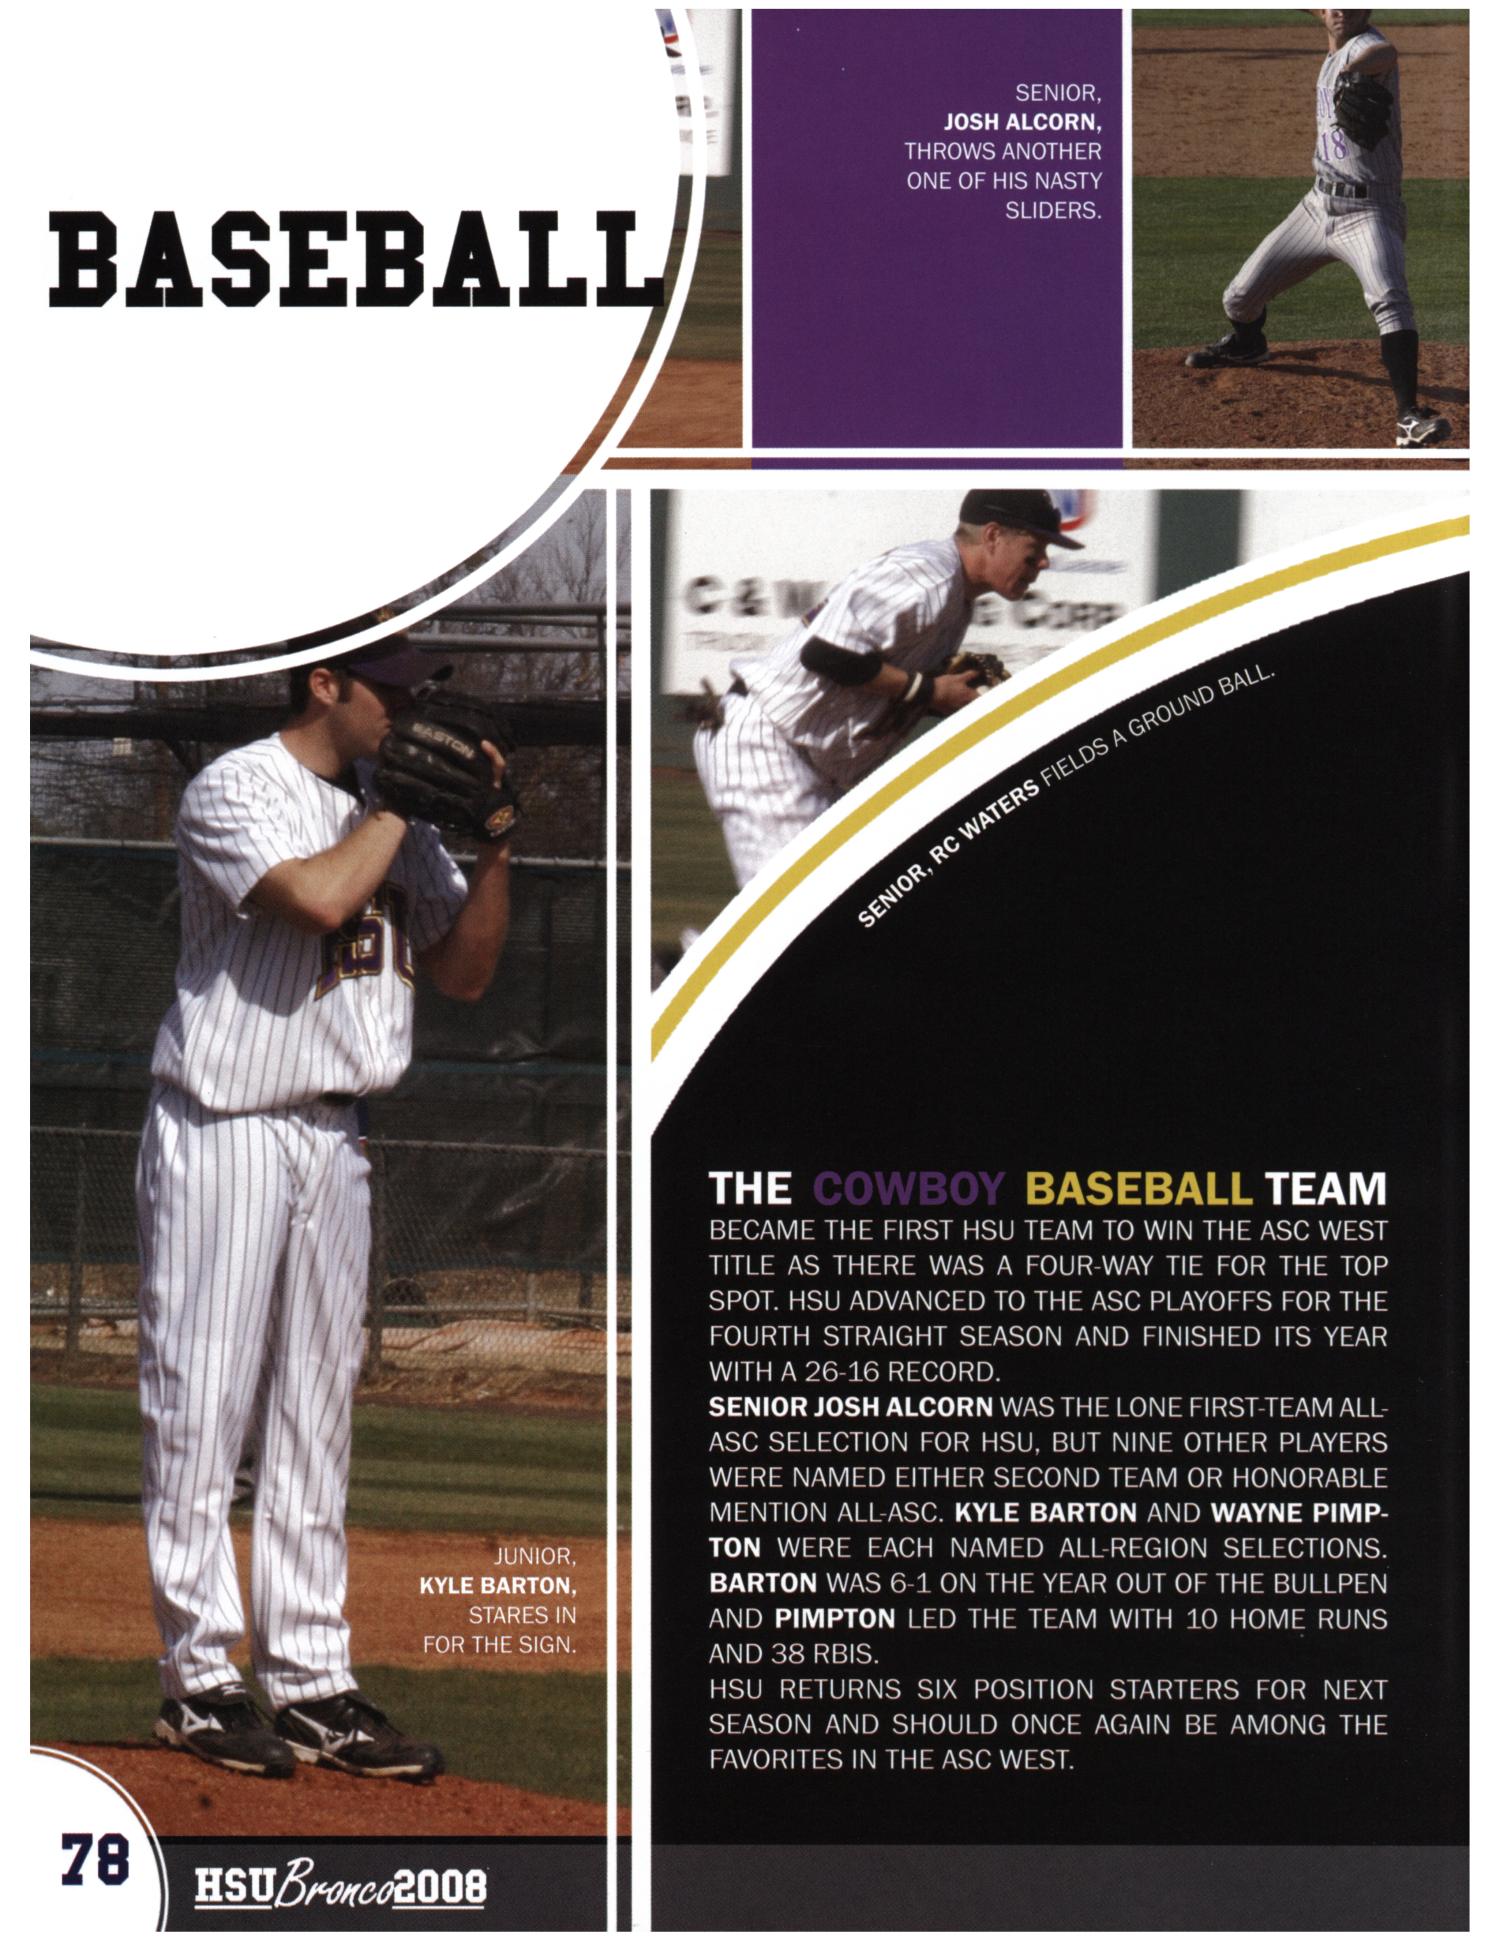 The Bronco, Yearbook of Hardin-Simmons University, 2008
                                                
                                                    78
                                                